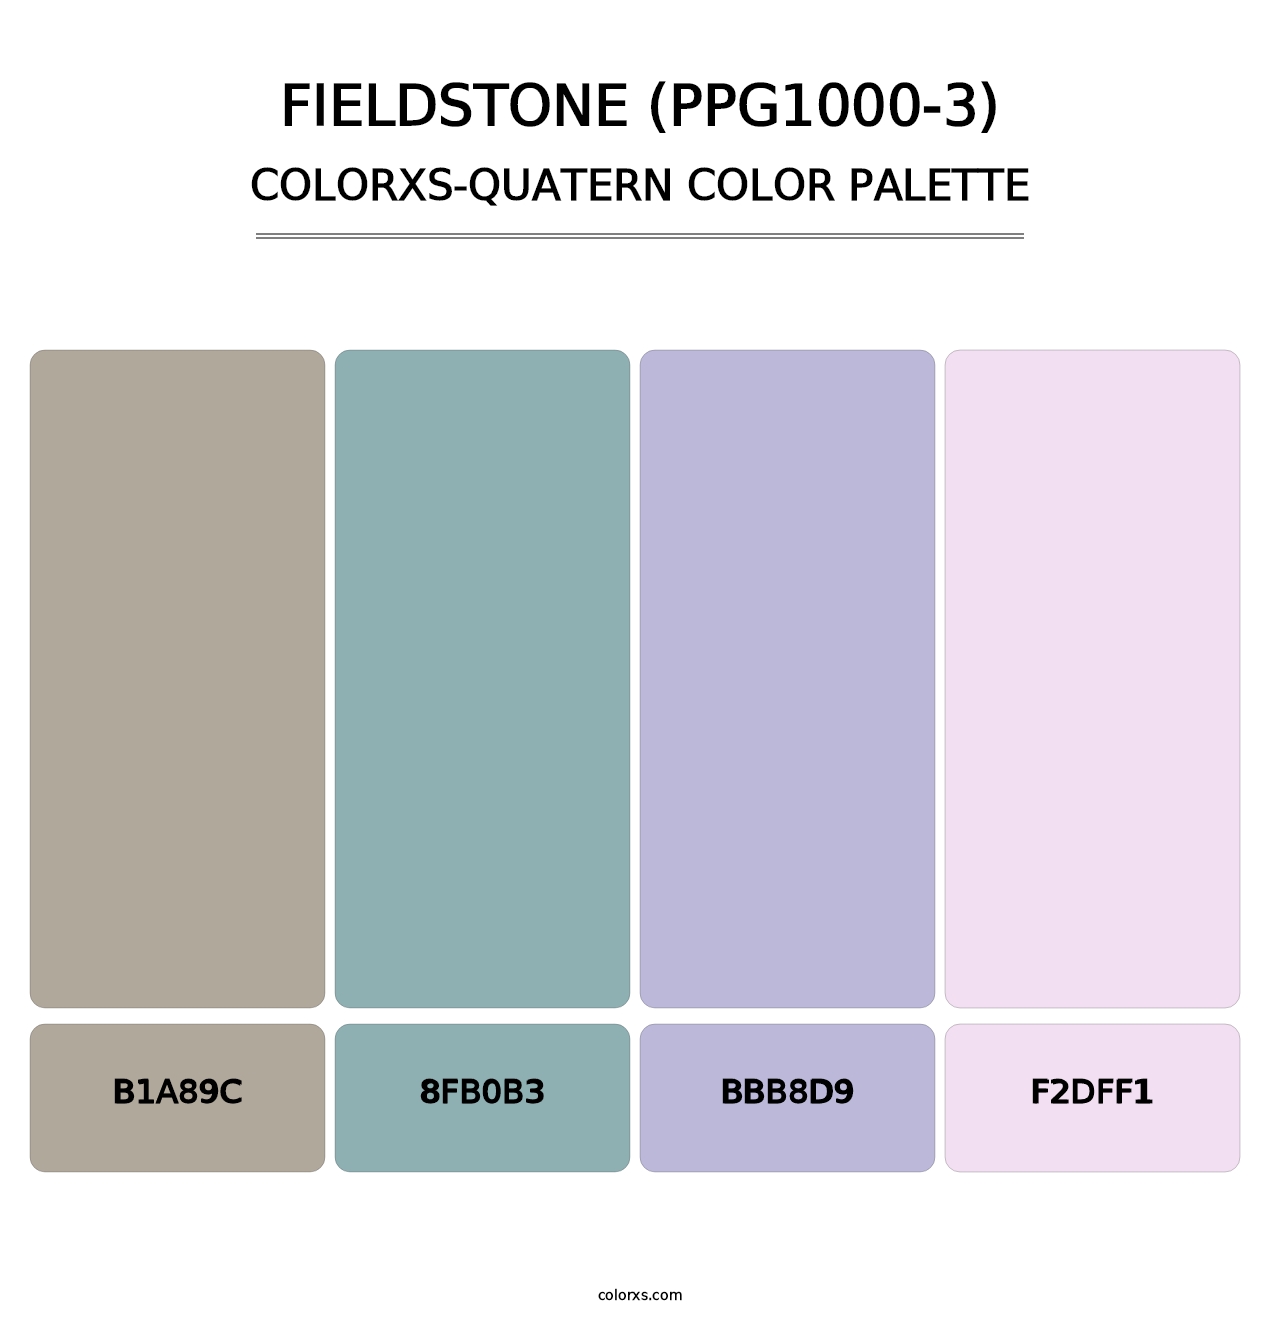 Fieldstone (PPG1000-3) - Colorxs Quatern Palette